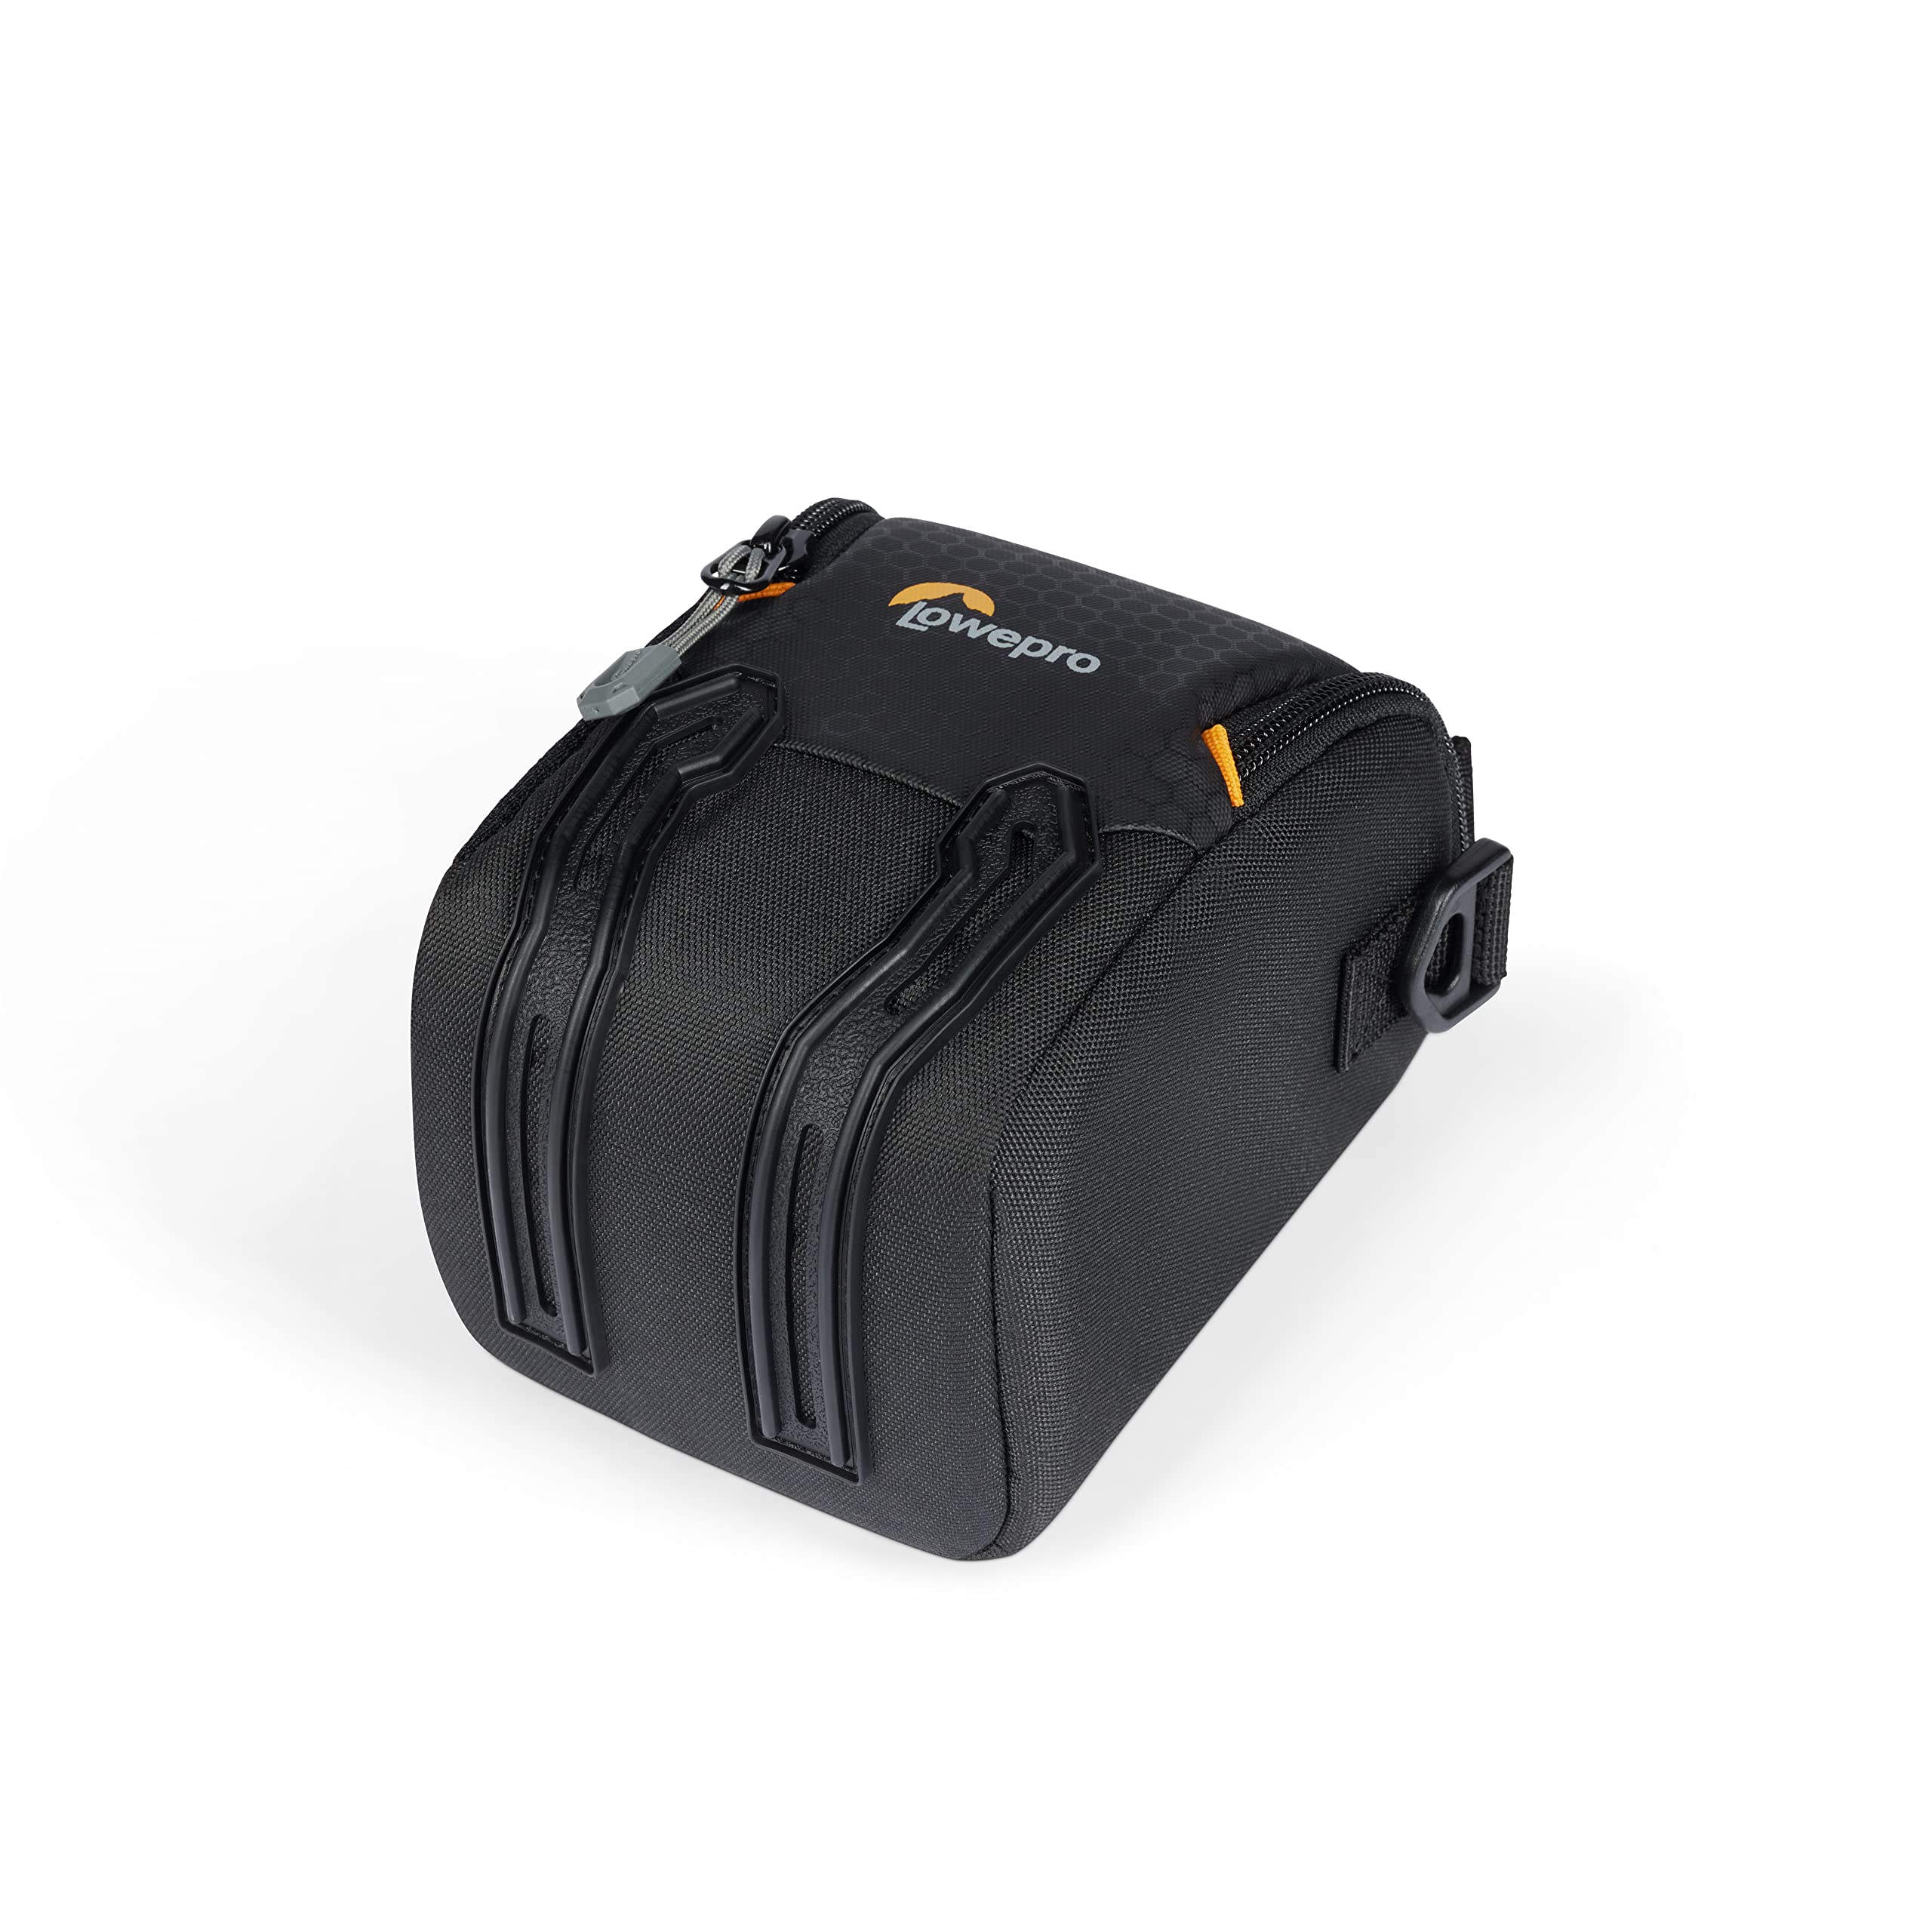 Lowepro Adventura, Camera Schoulder Bag with Adjustable/Removable Shoulder Strap